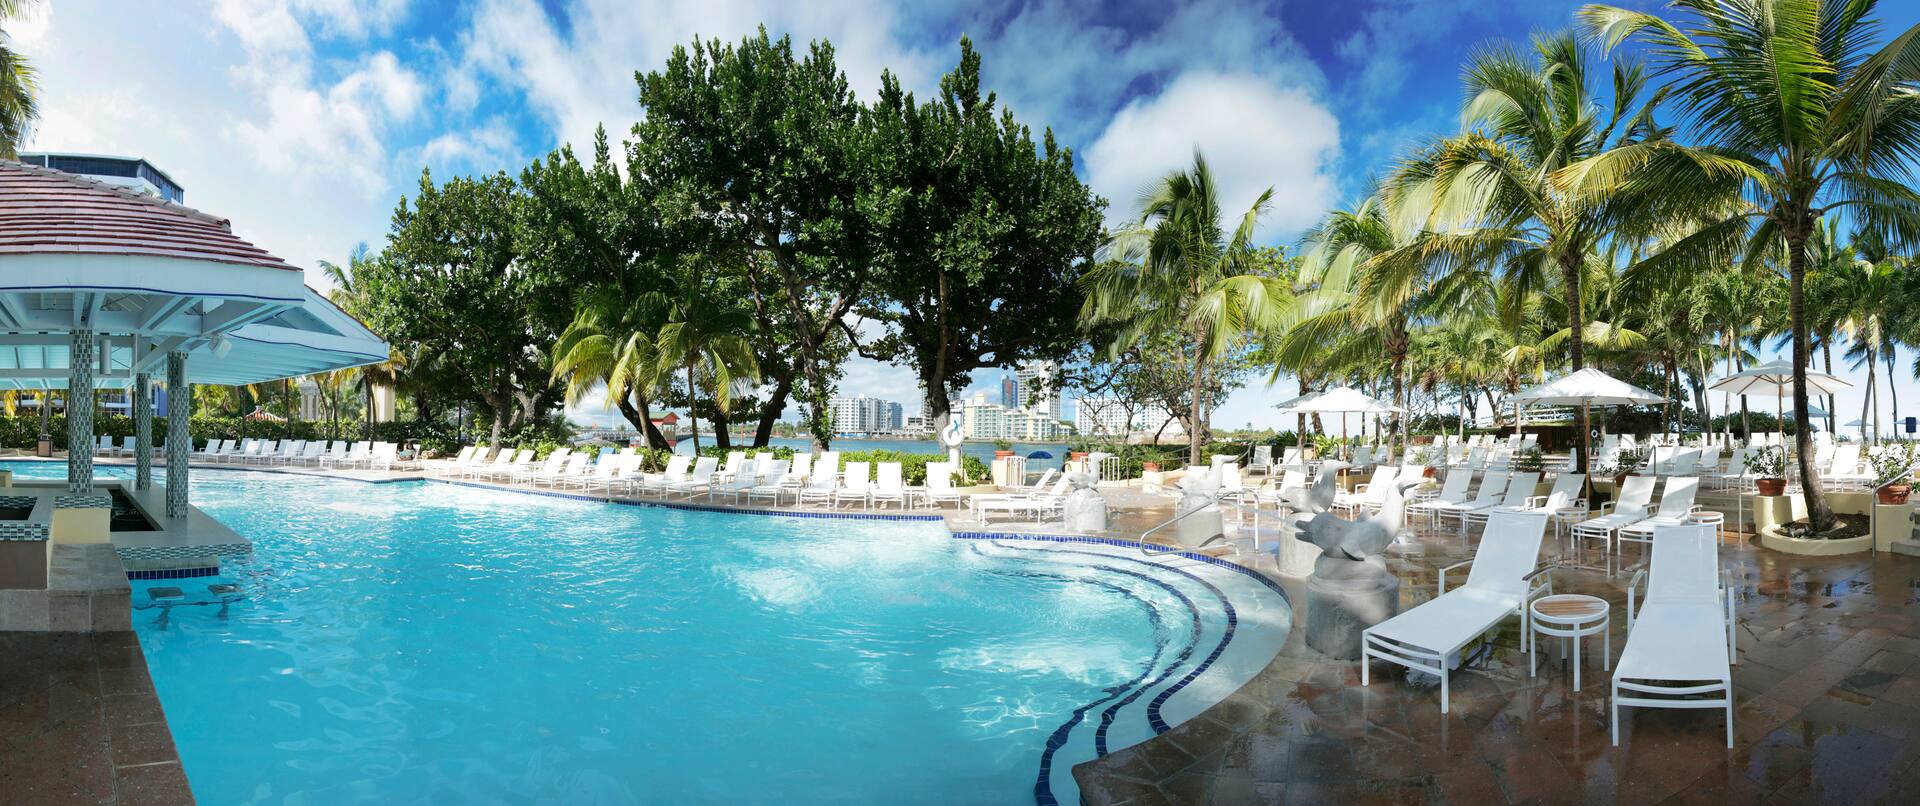 Outdoor Resort Style Pool